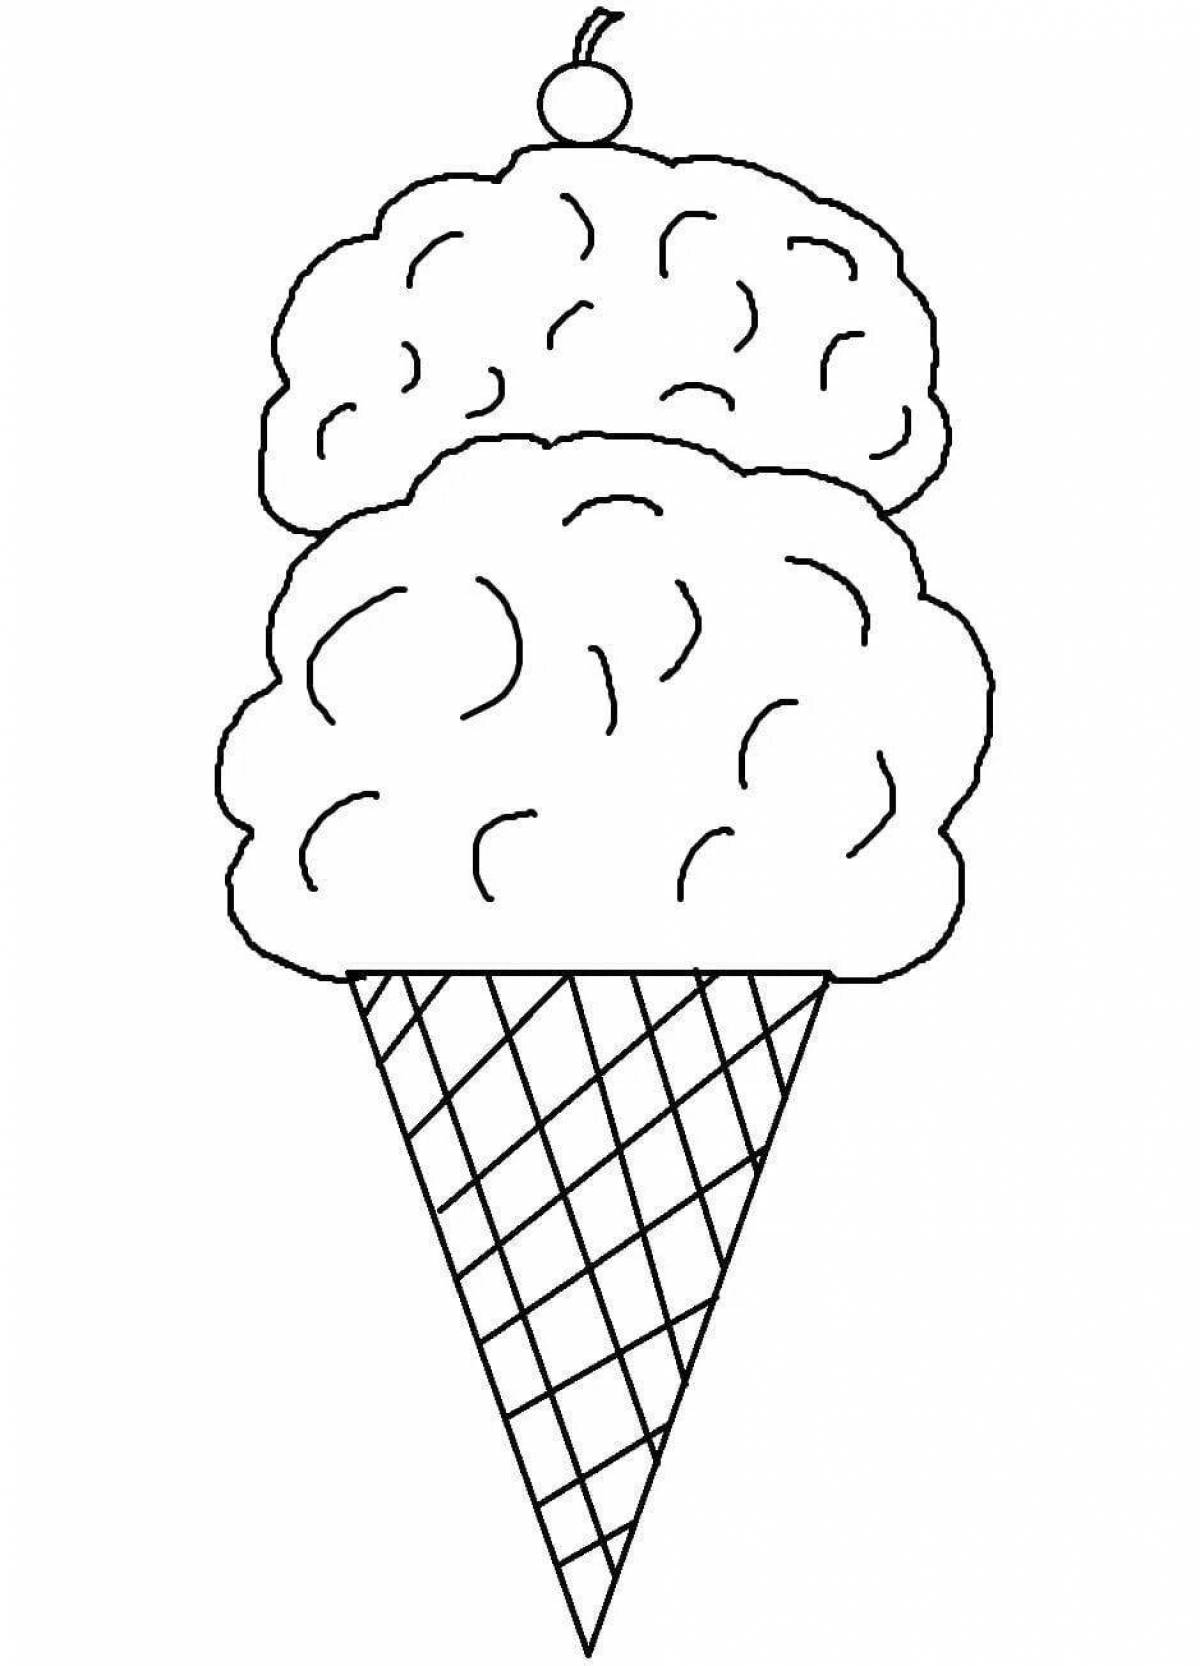 Bright ice cream pattern